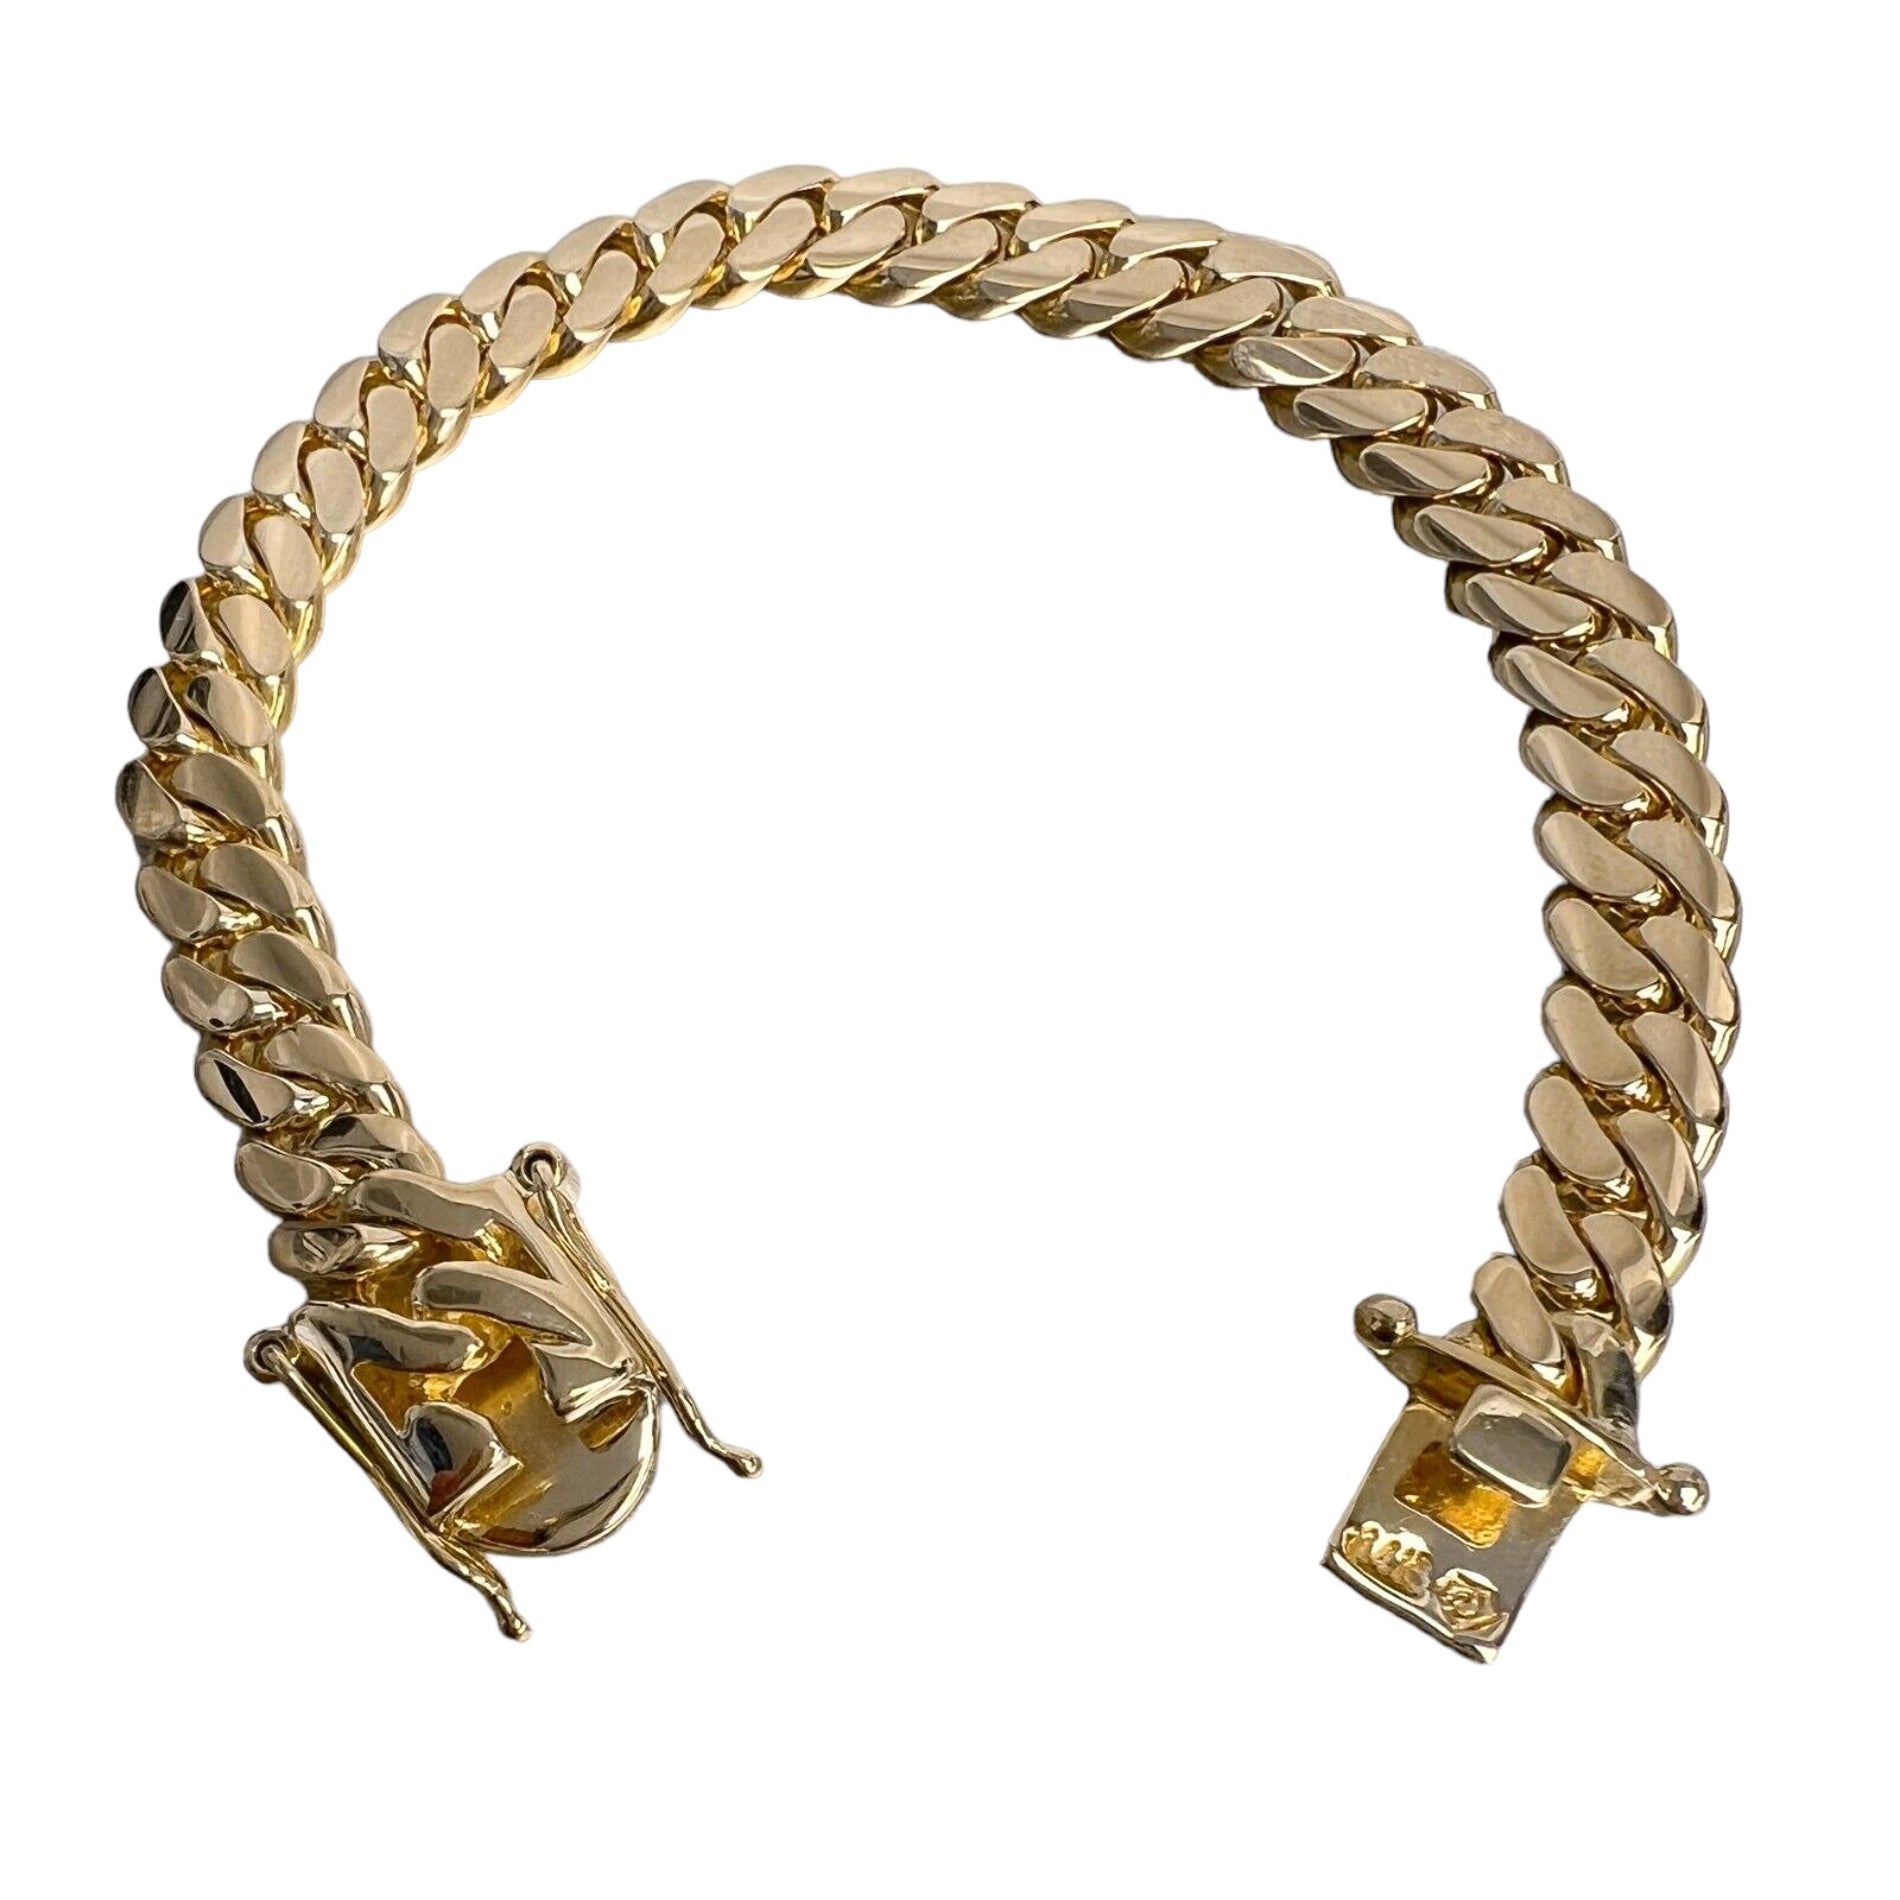 Men's Miami Cuban Link Bracelet in 14K Yellow Gold